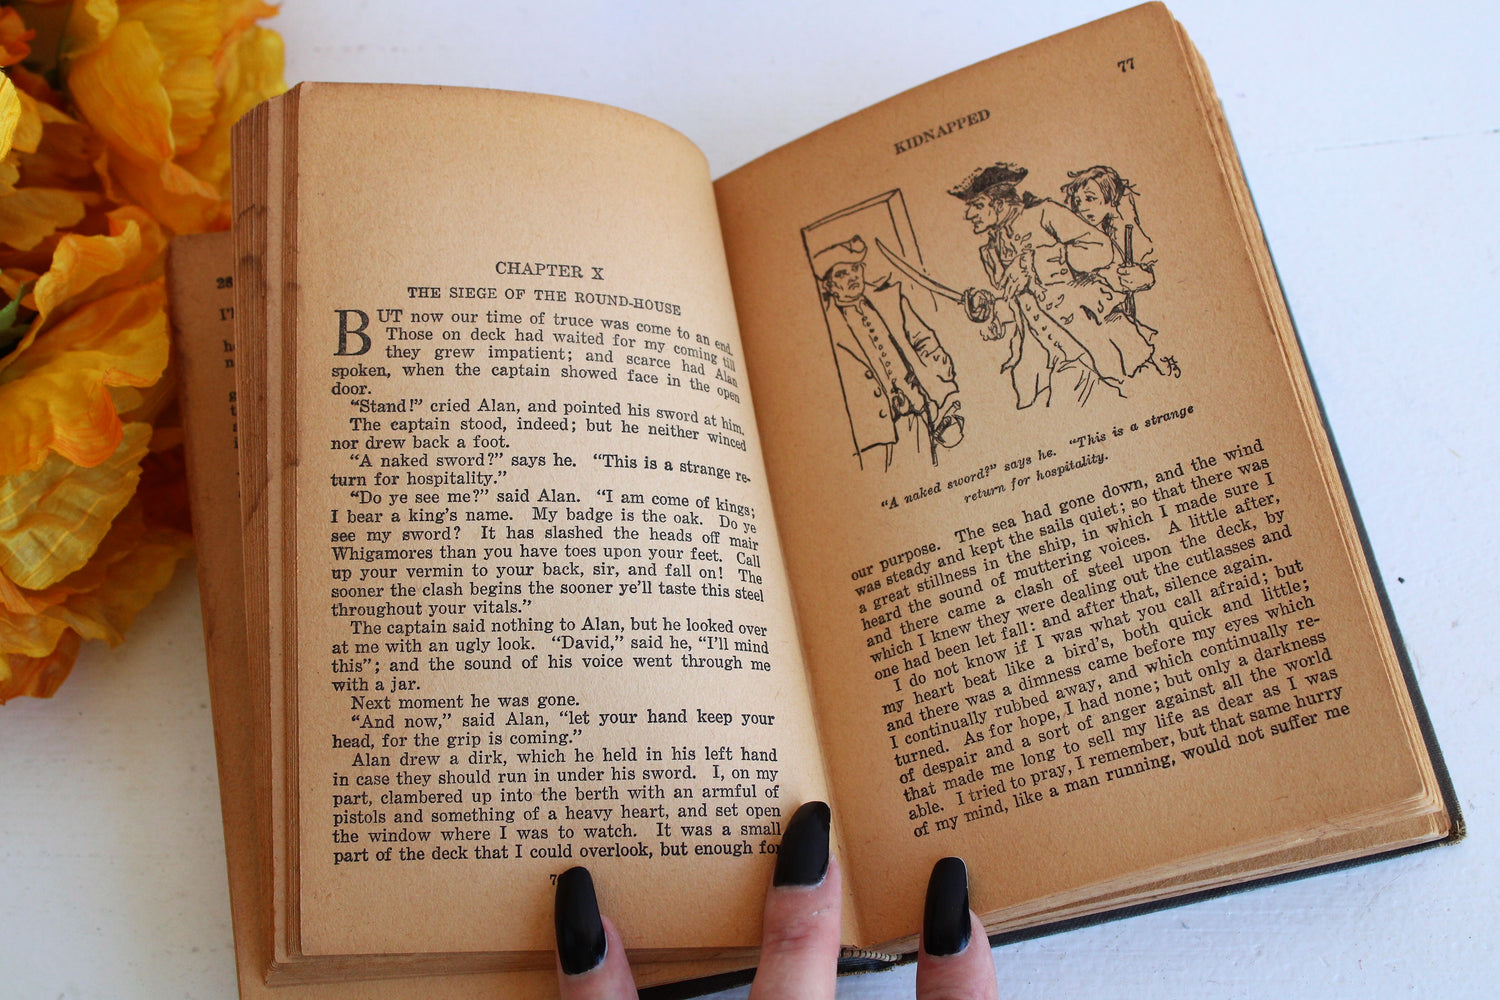 Vintage 1926 Robert Louis Stevenson's Kidnapped Book